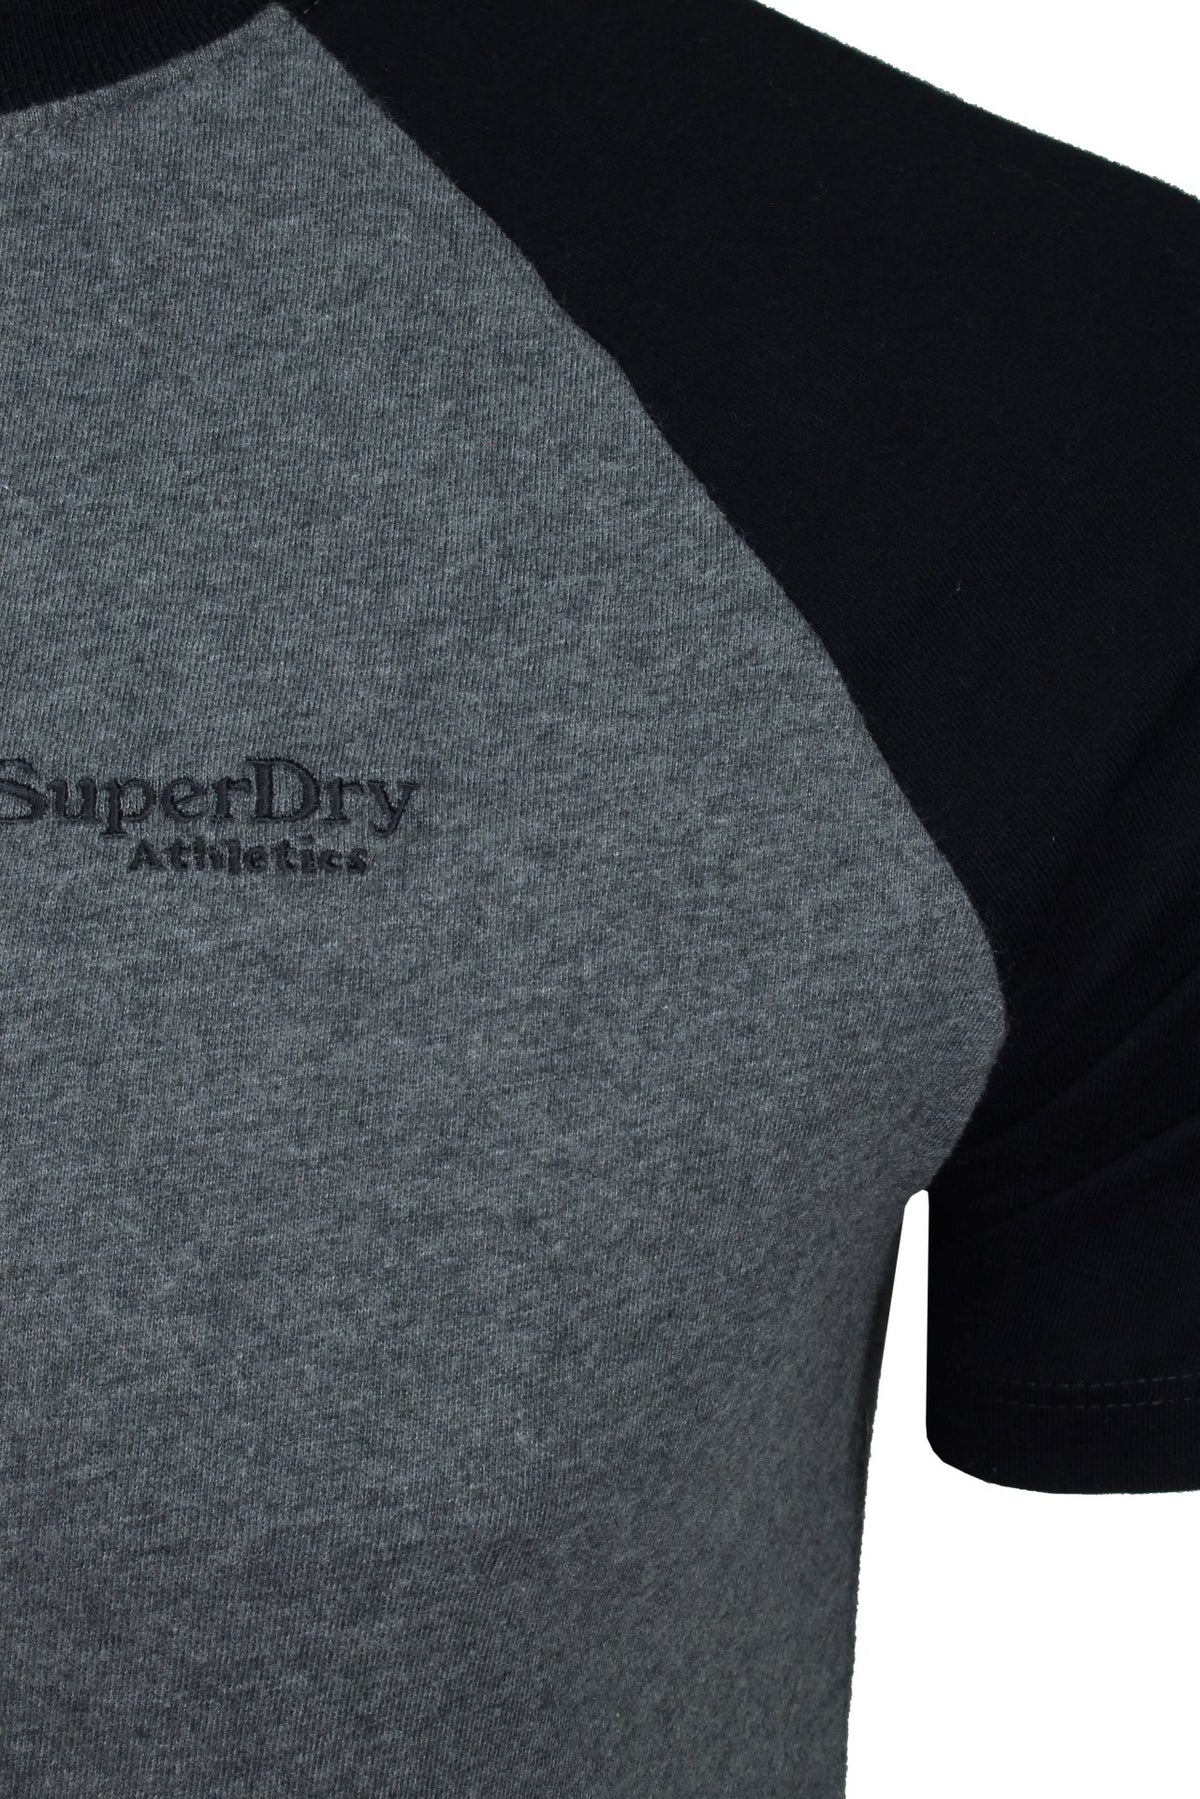 Superdry Mens Organic Cotton Essential Logo Baseball T-Shirt, 02, M1011838A, Rich Charcoal Marl/ Black